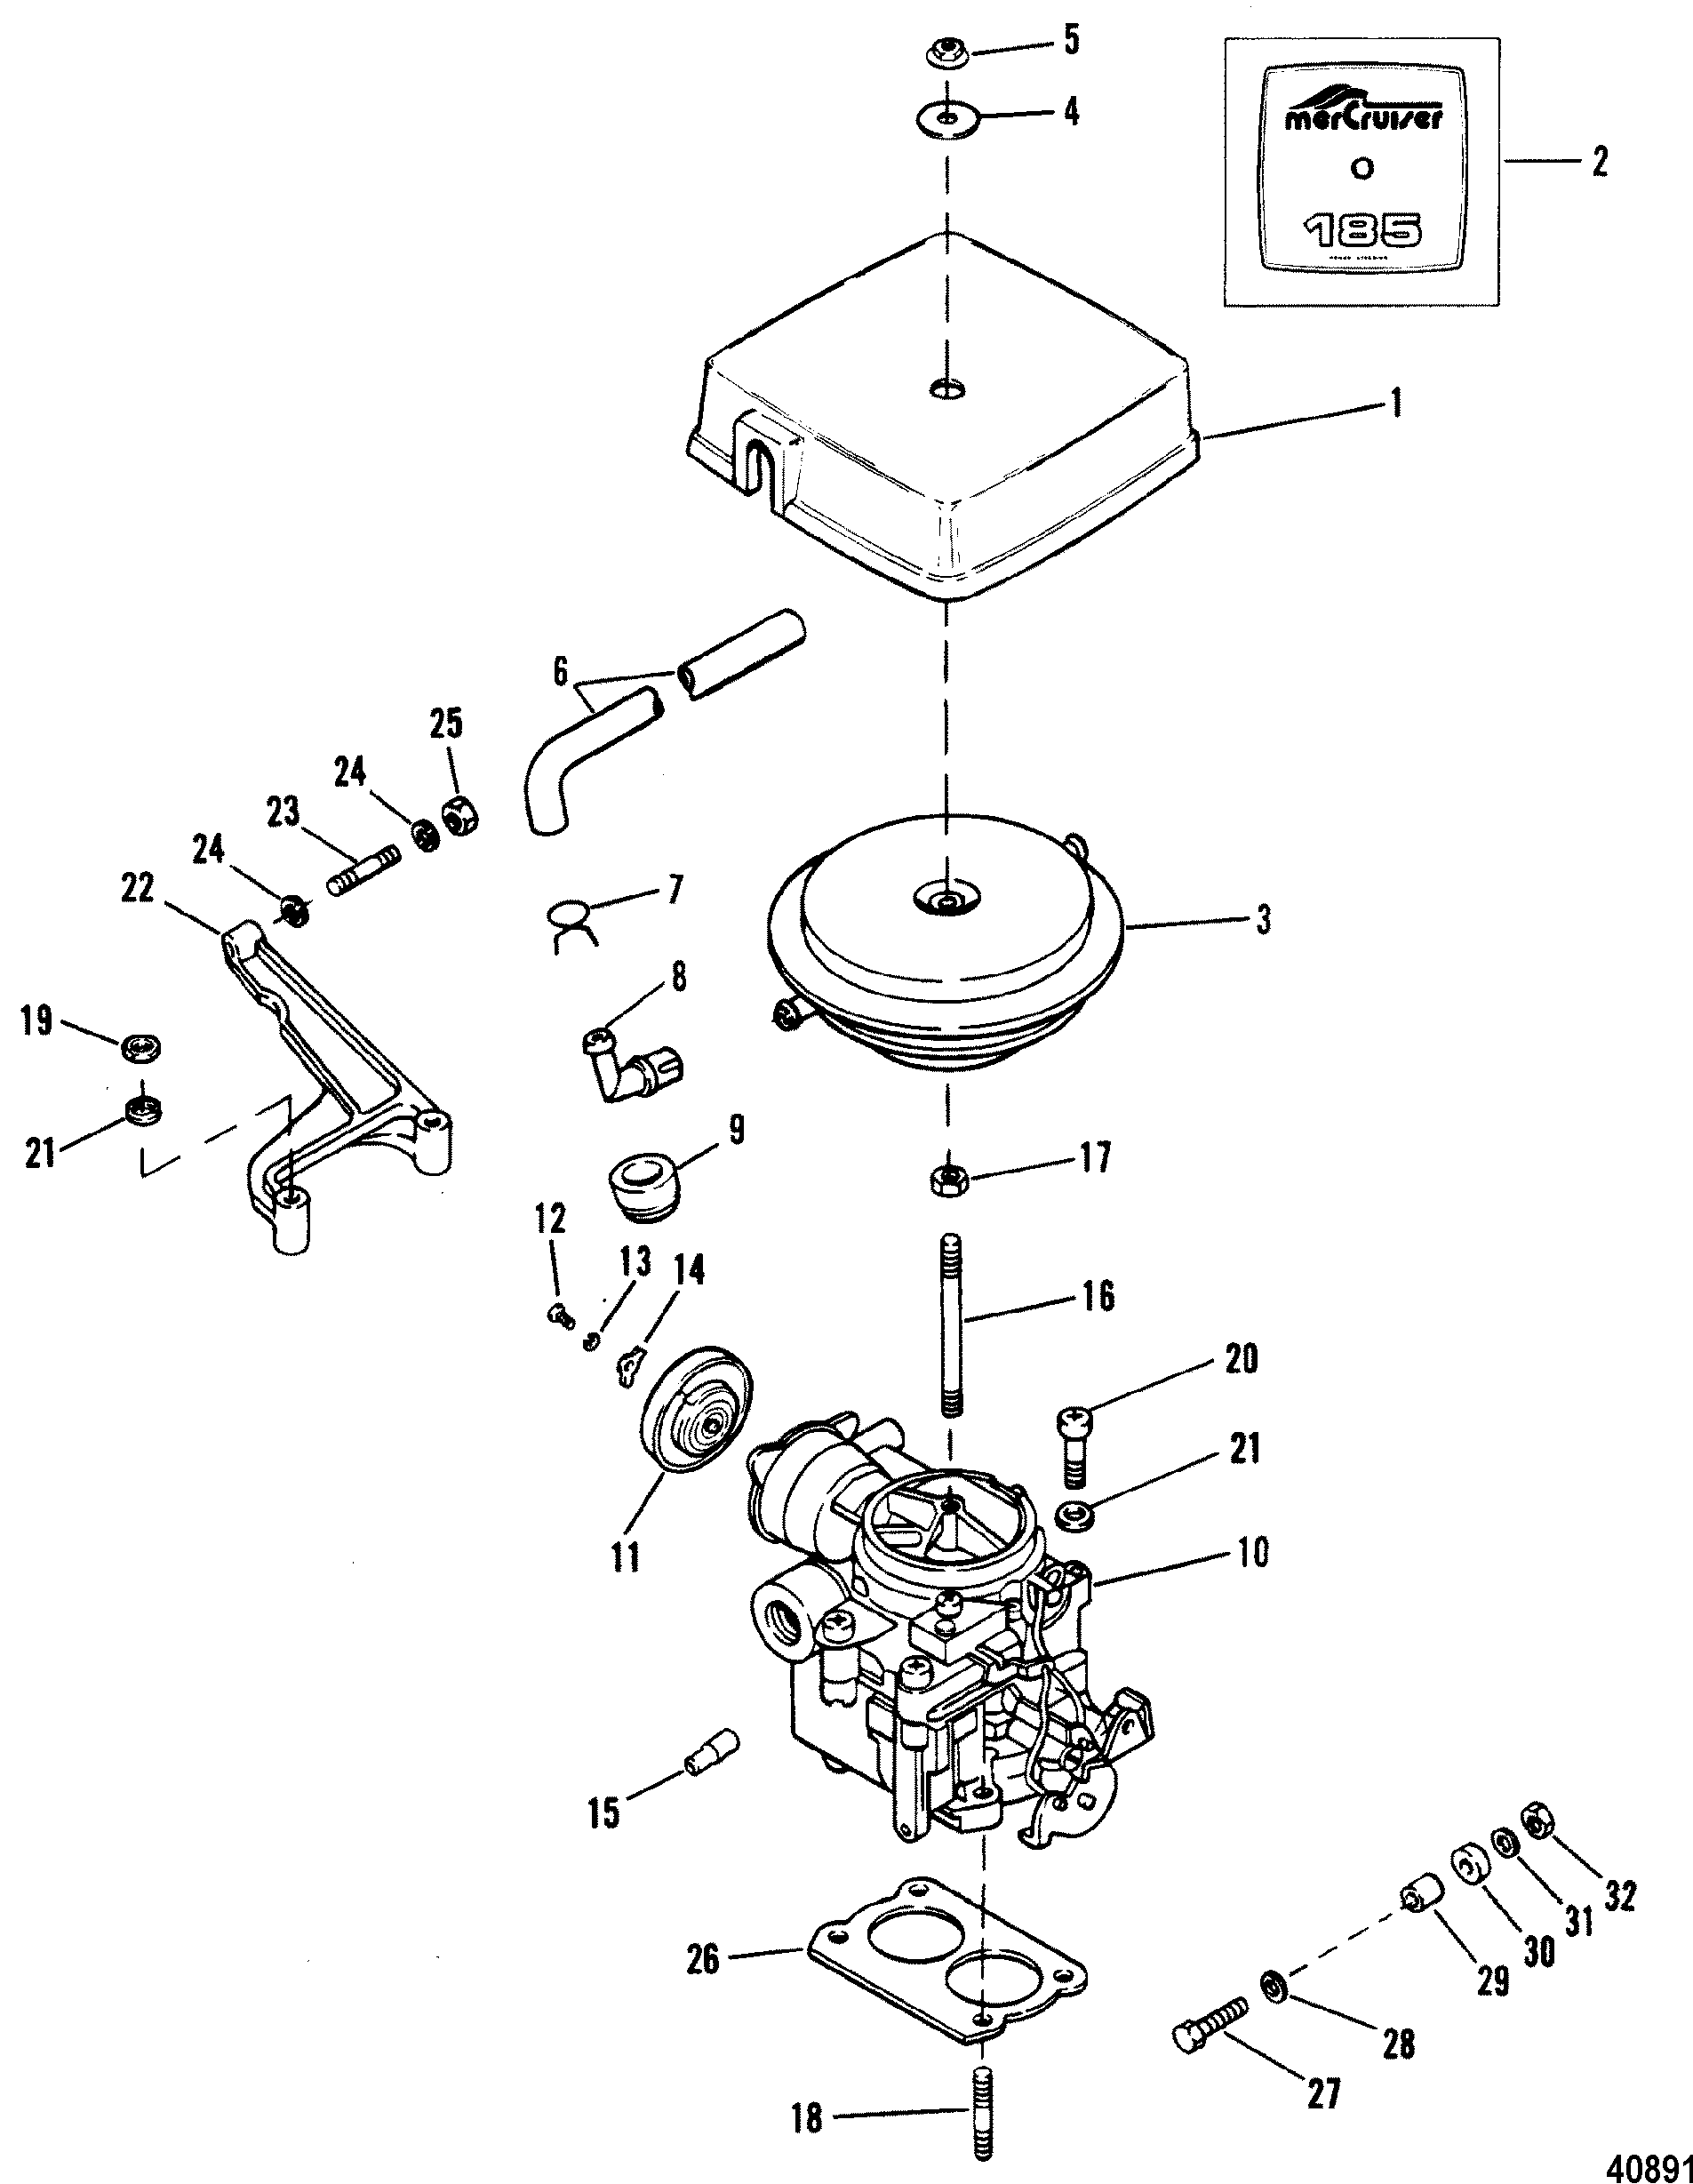 Carburetor & Throttle Linkage(185)